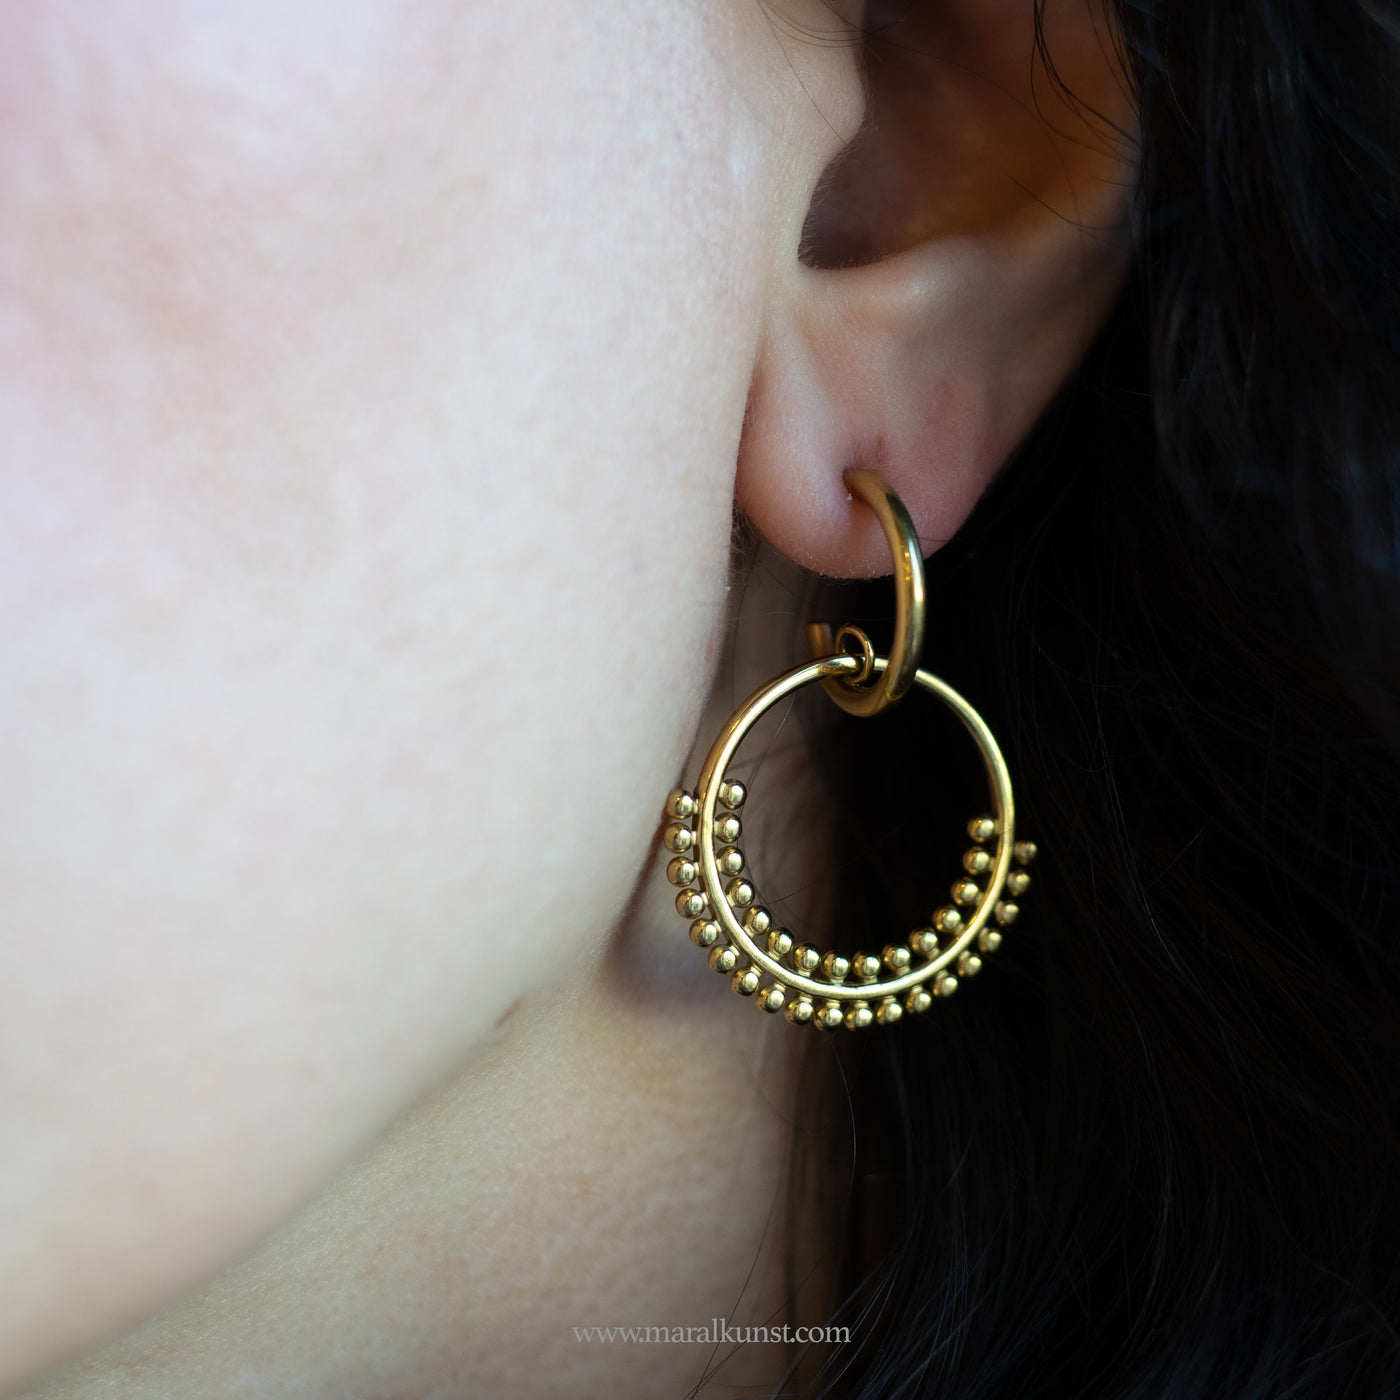 Friendship circle earrings